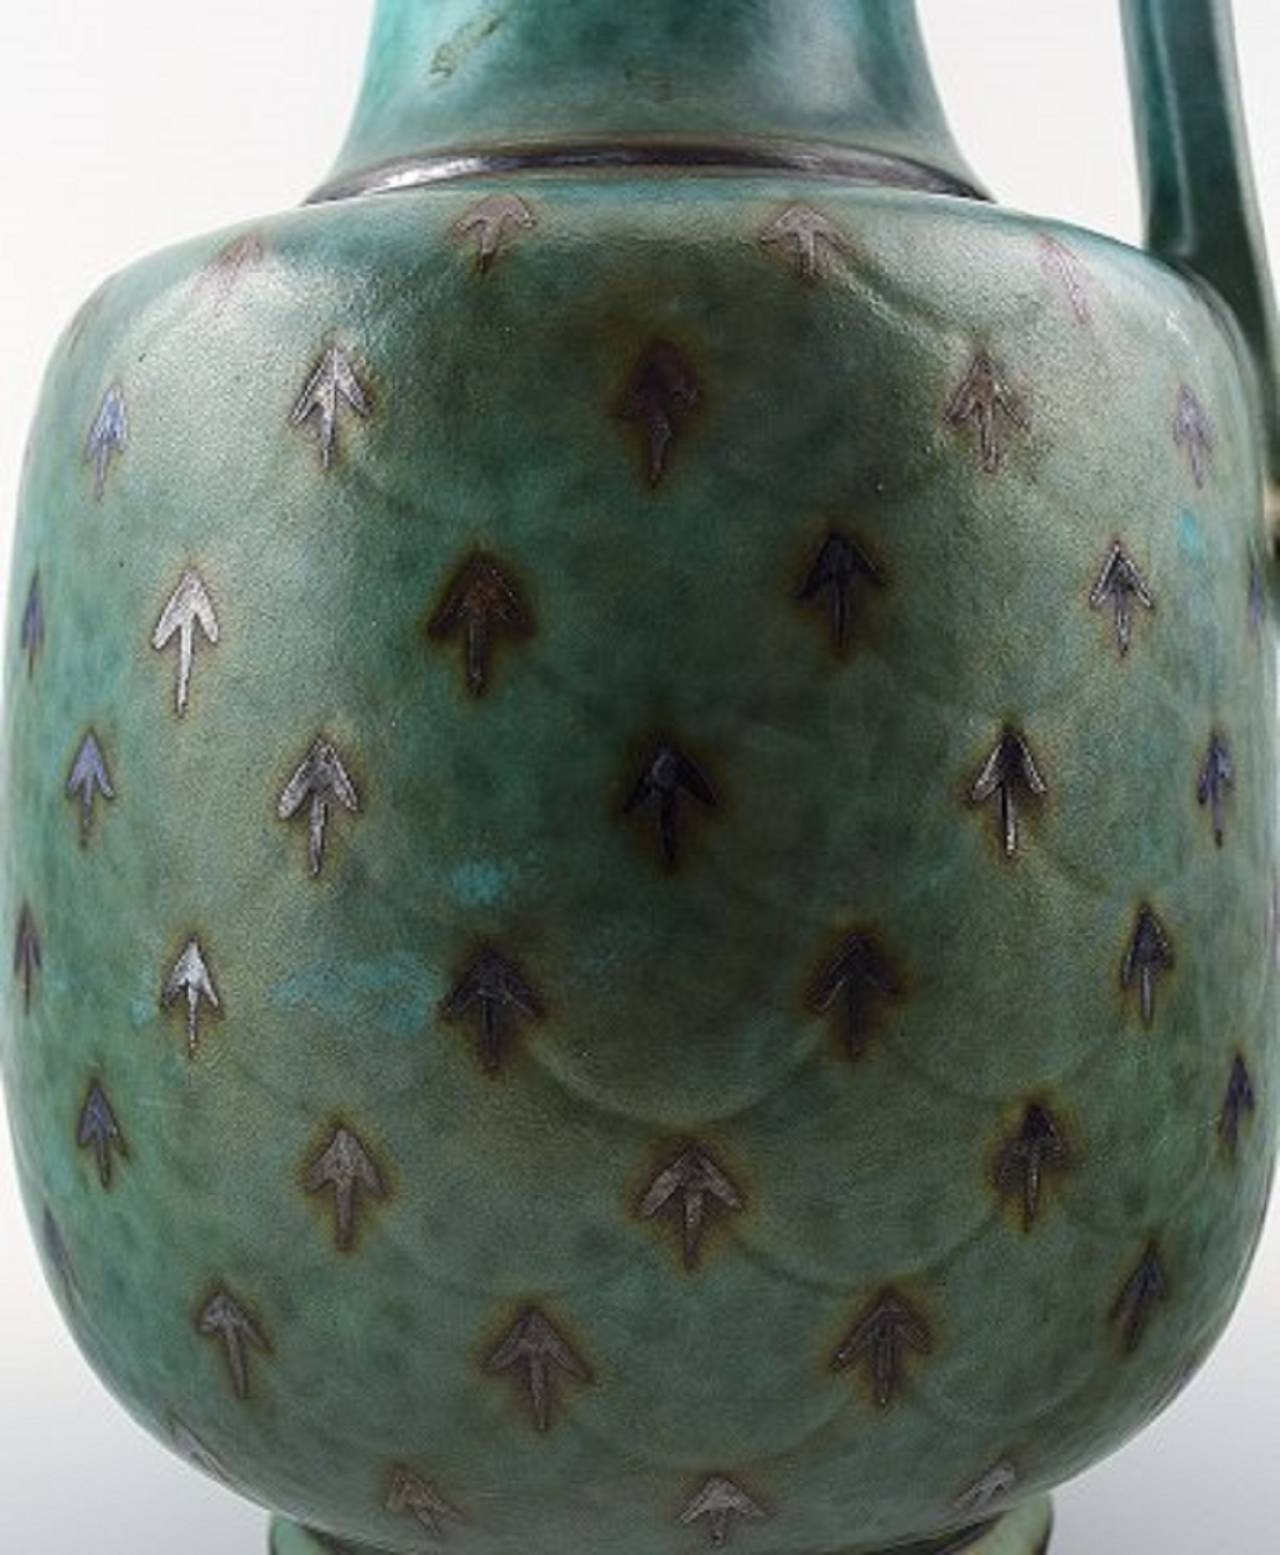 Wilhelm Kage, Gustavsberg, Argenta vase / pitcher with hand-painted decoration.
Height 31.5 cm. Stamped Gustavsberg Argenta 1217.
In perfect condition.